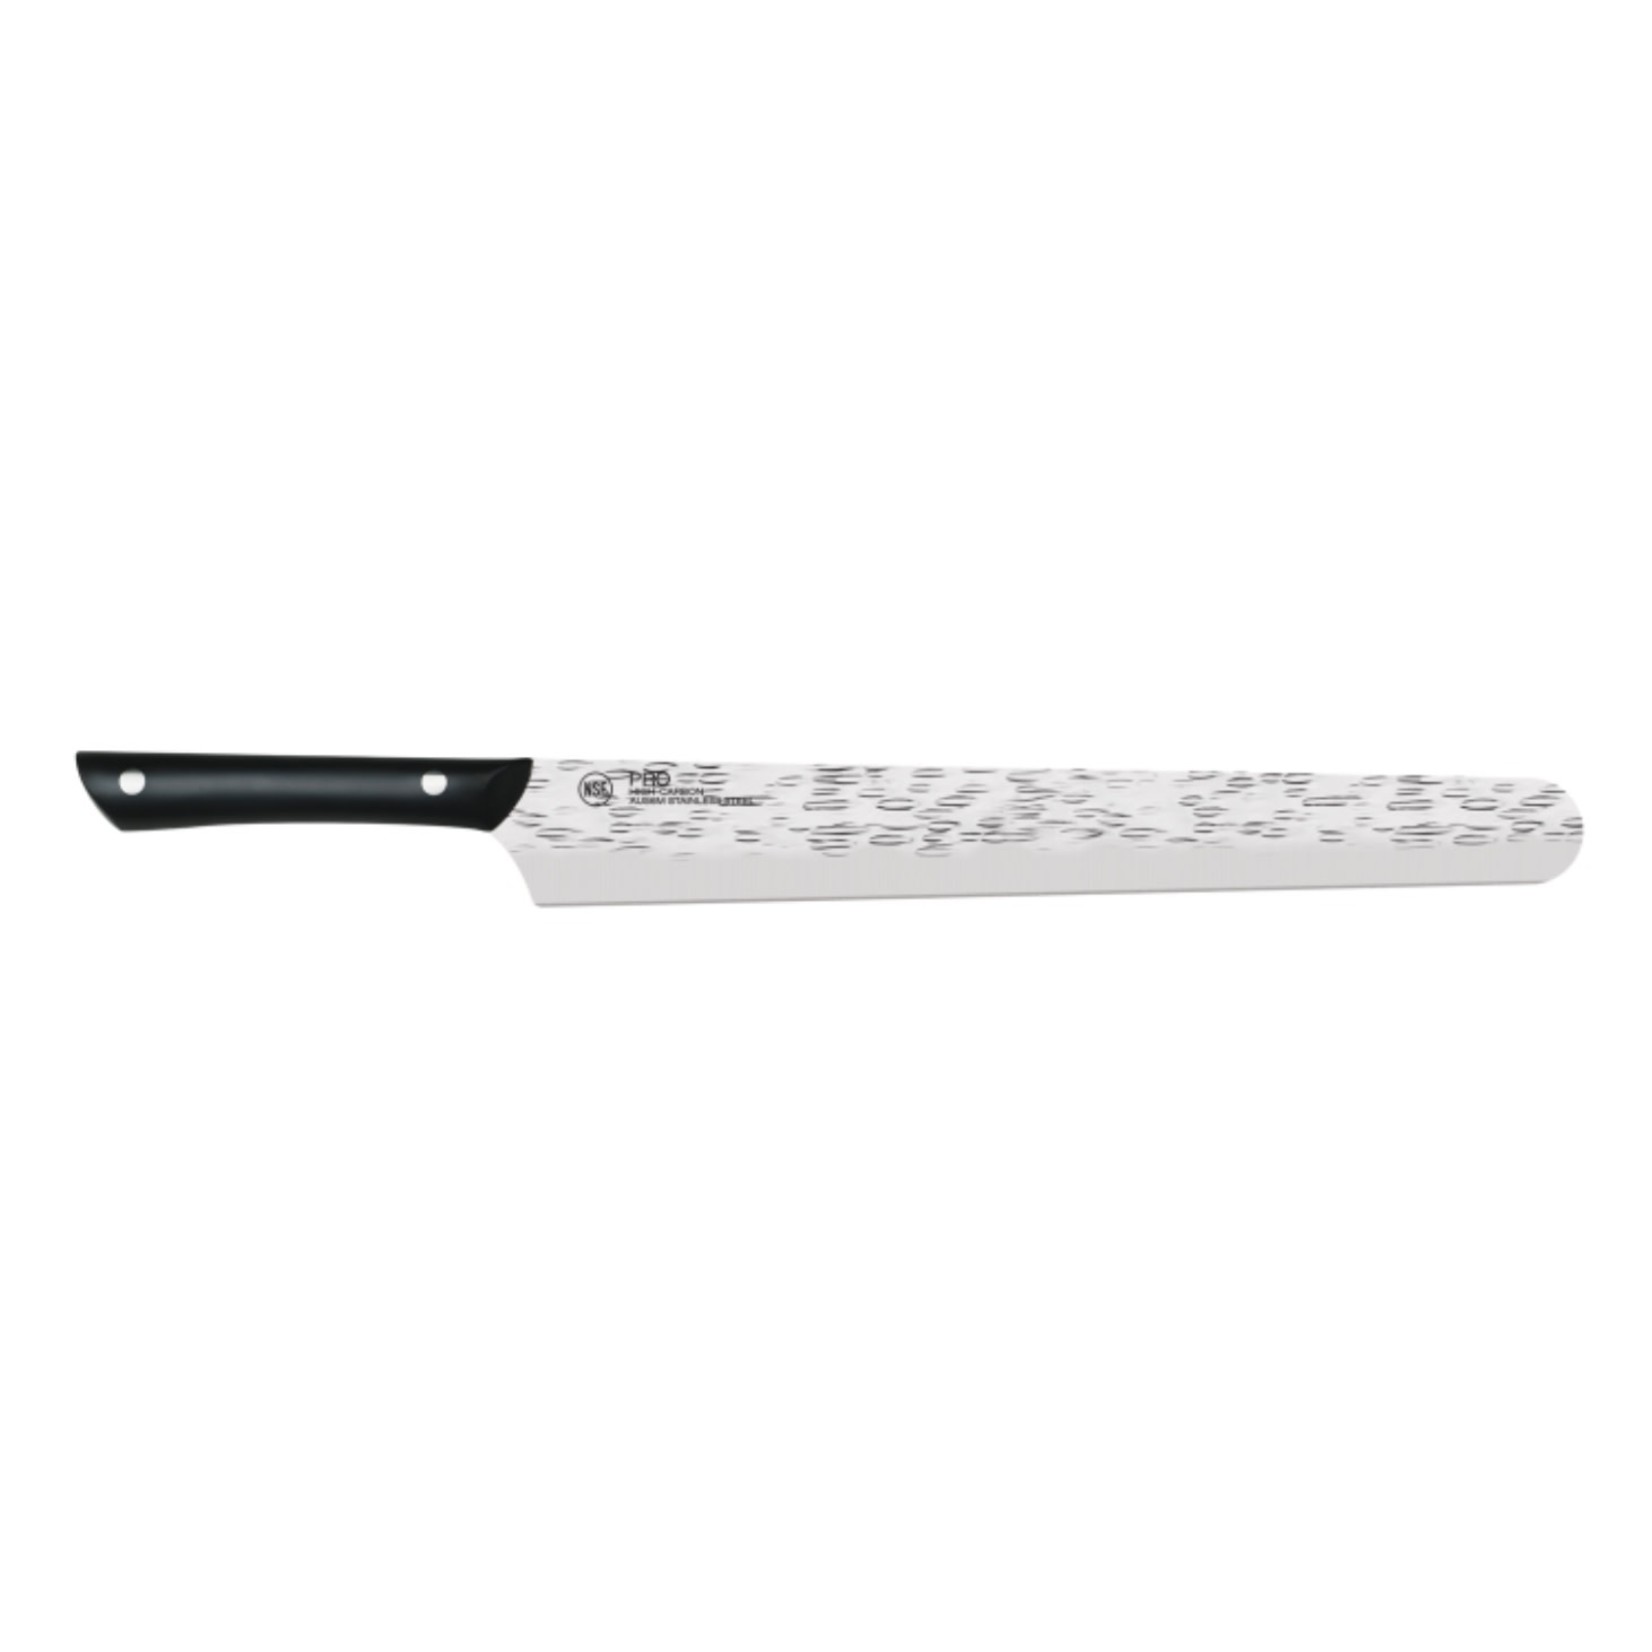 KAI KAI Professional Slicing/Brisket Knife 12" REG $128.99